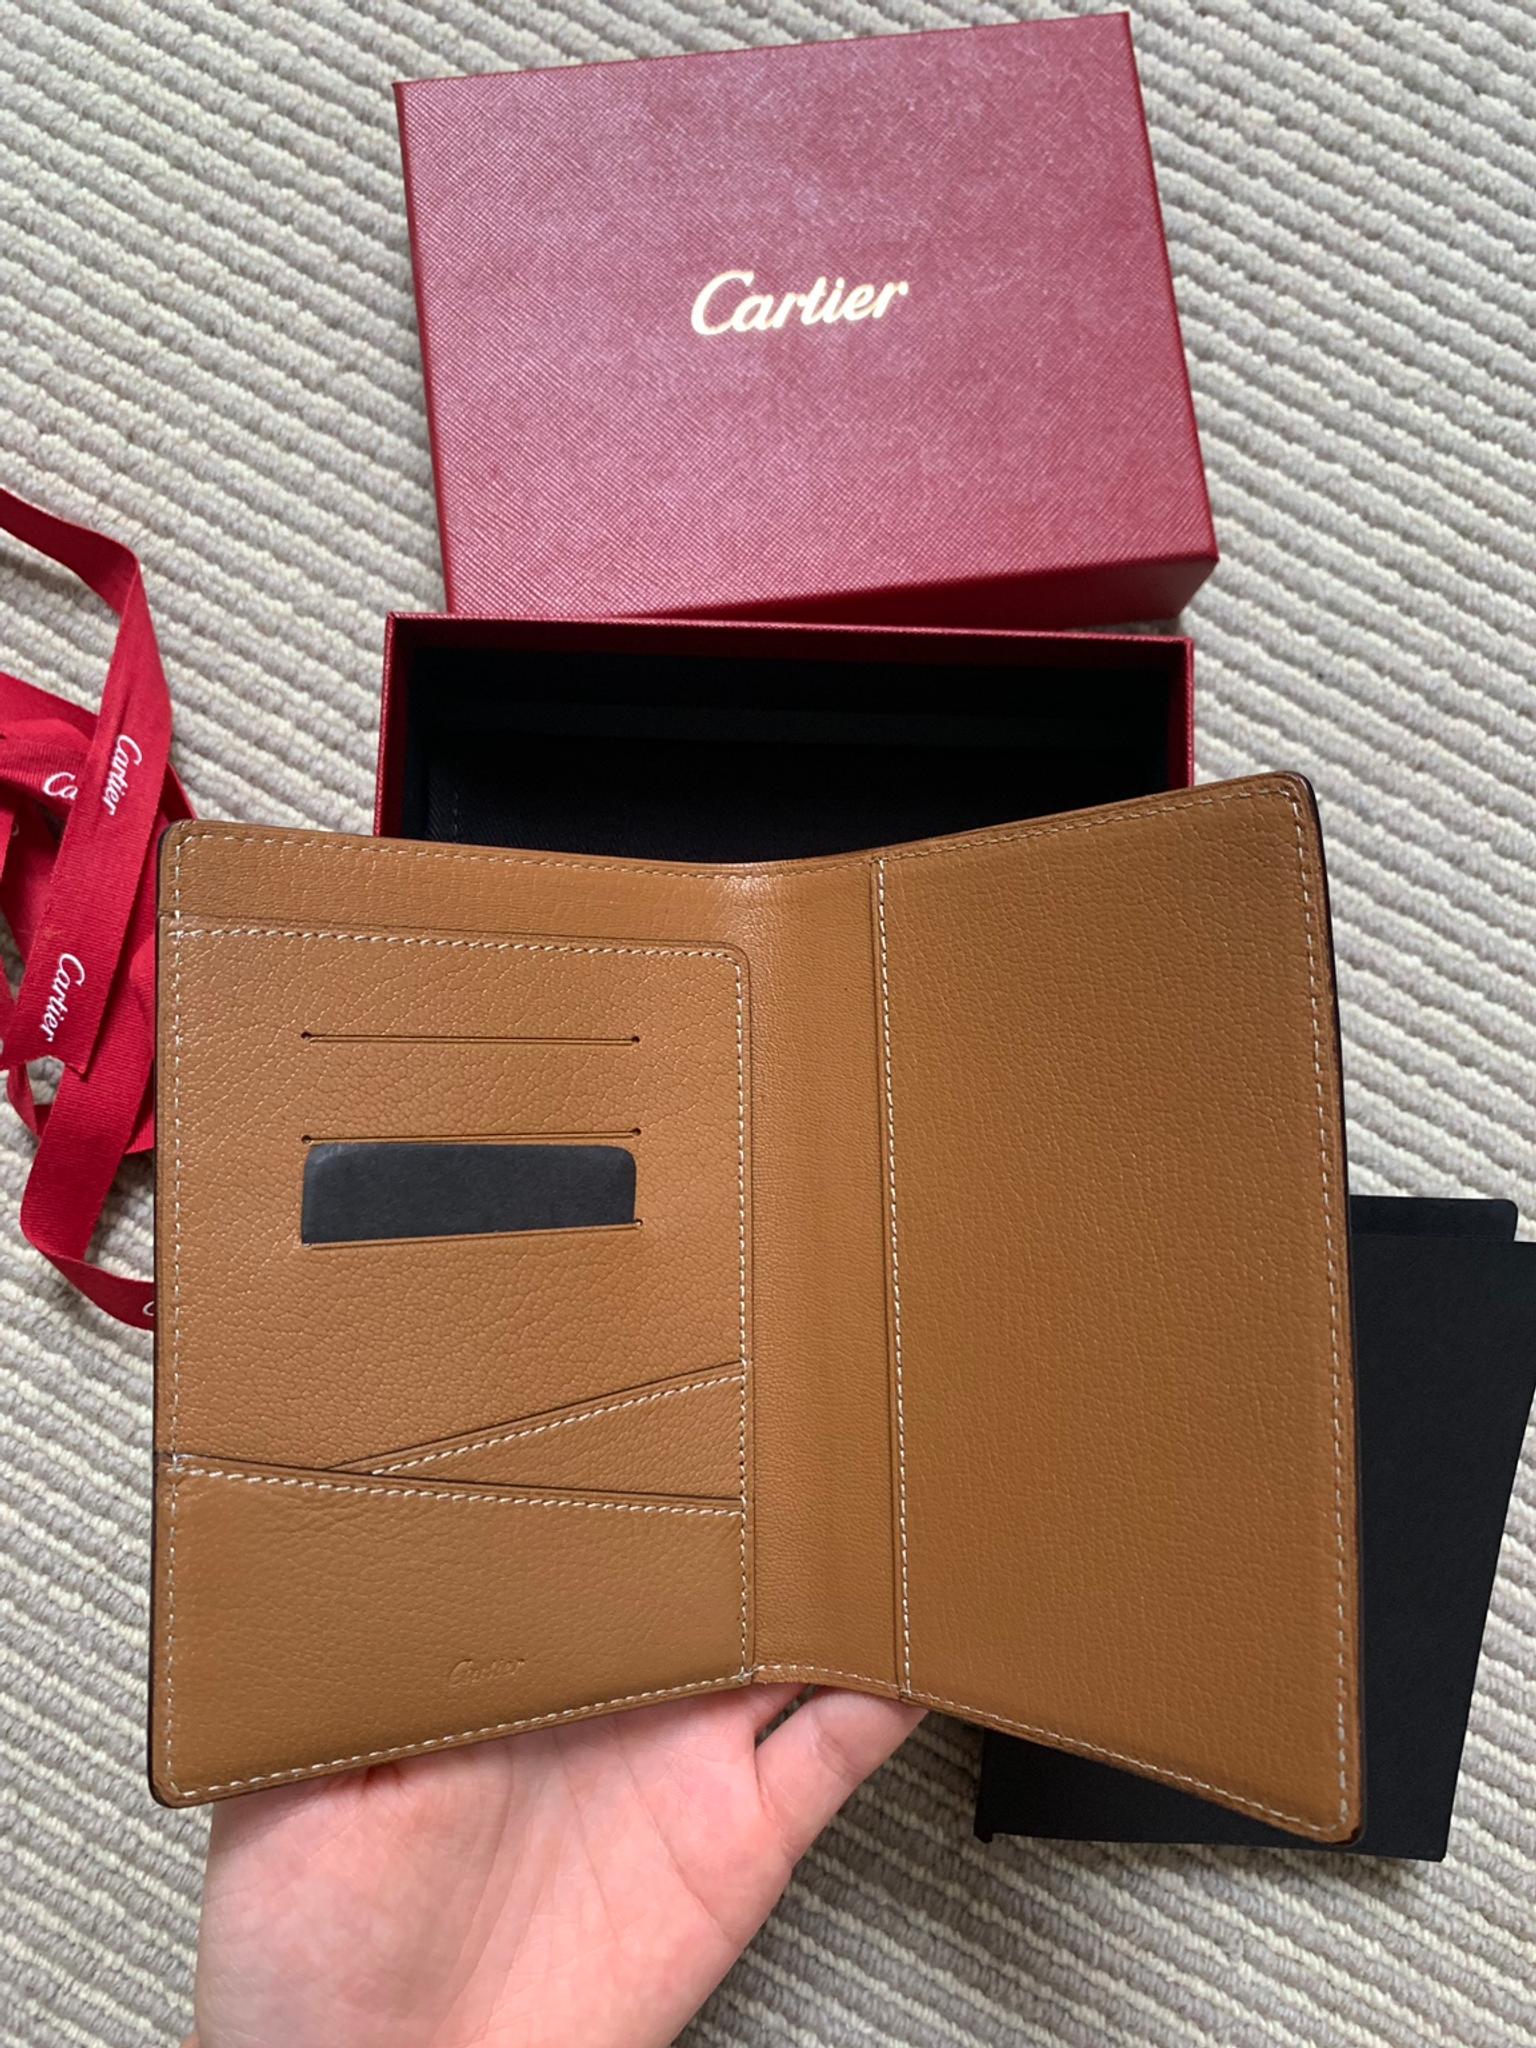 cartier leather passport holder